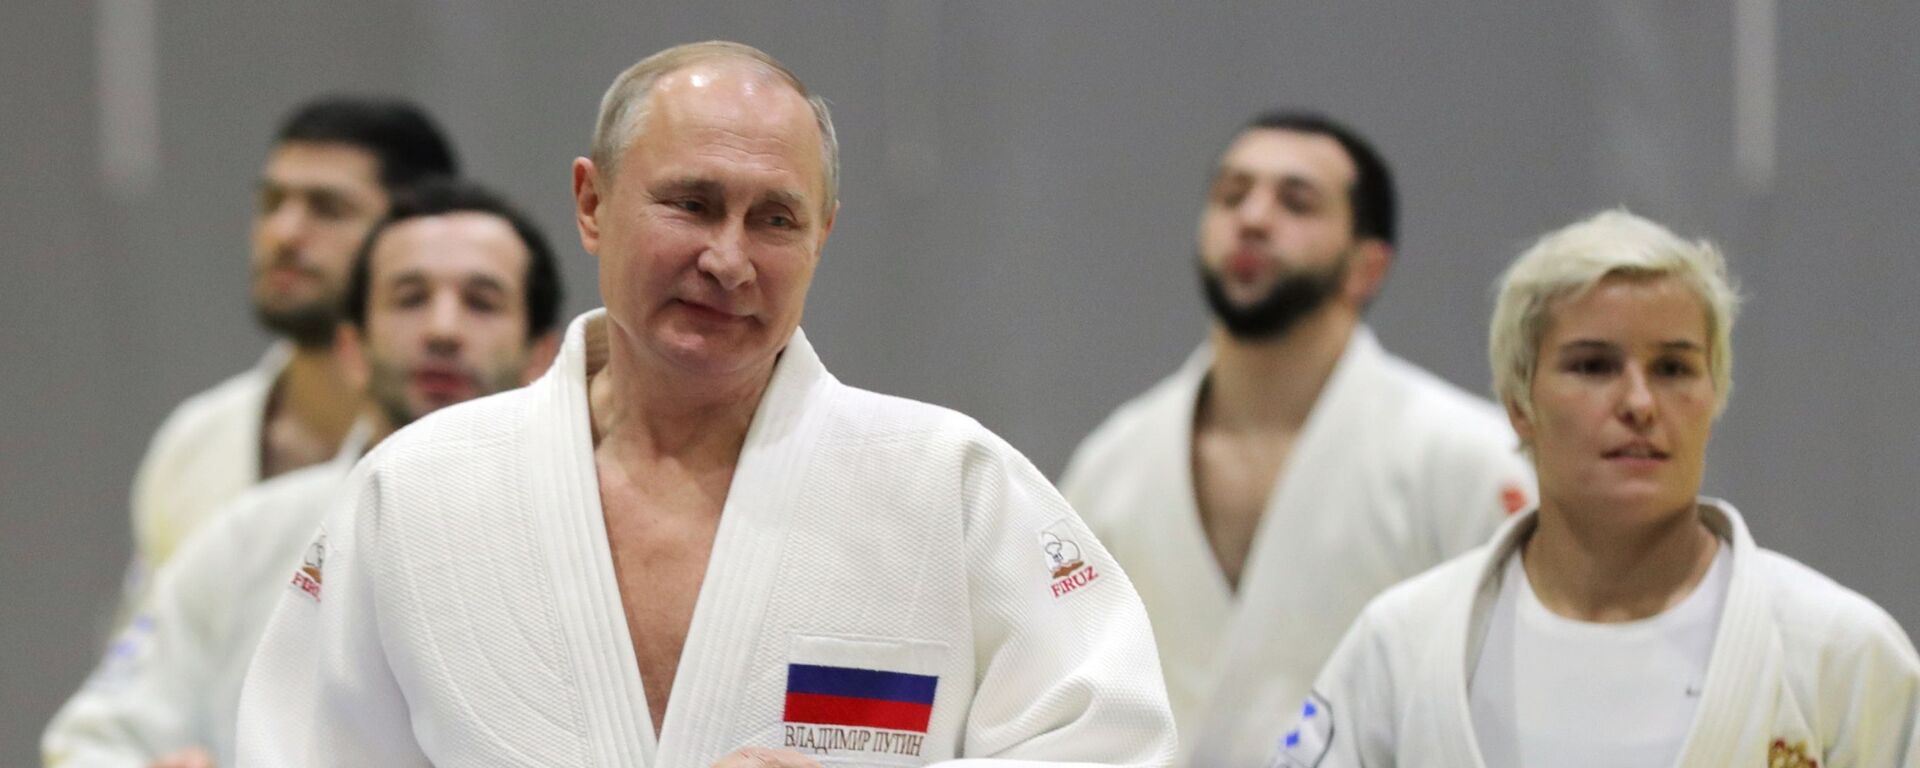 Ruski predsednik Vladimir Putin džudo, sport - Sputnik Srbija, 1920, 27.11.2019